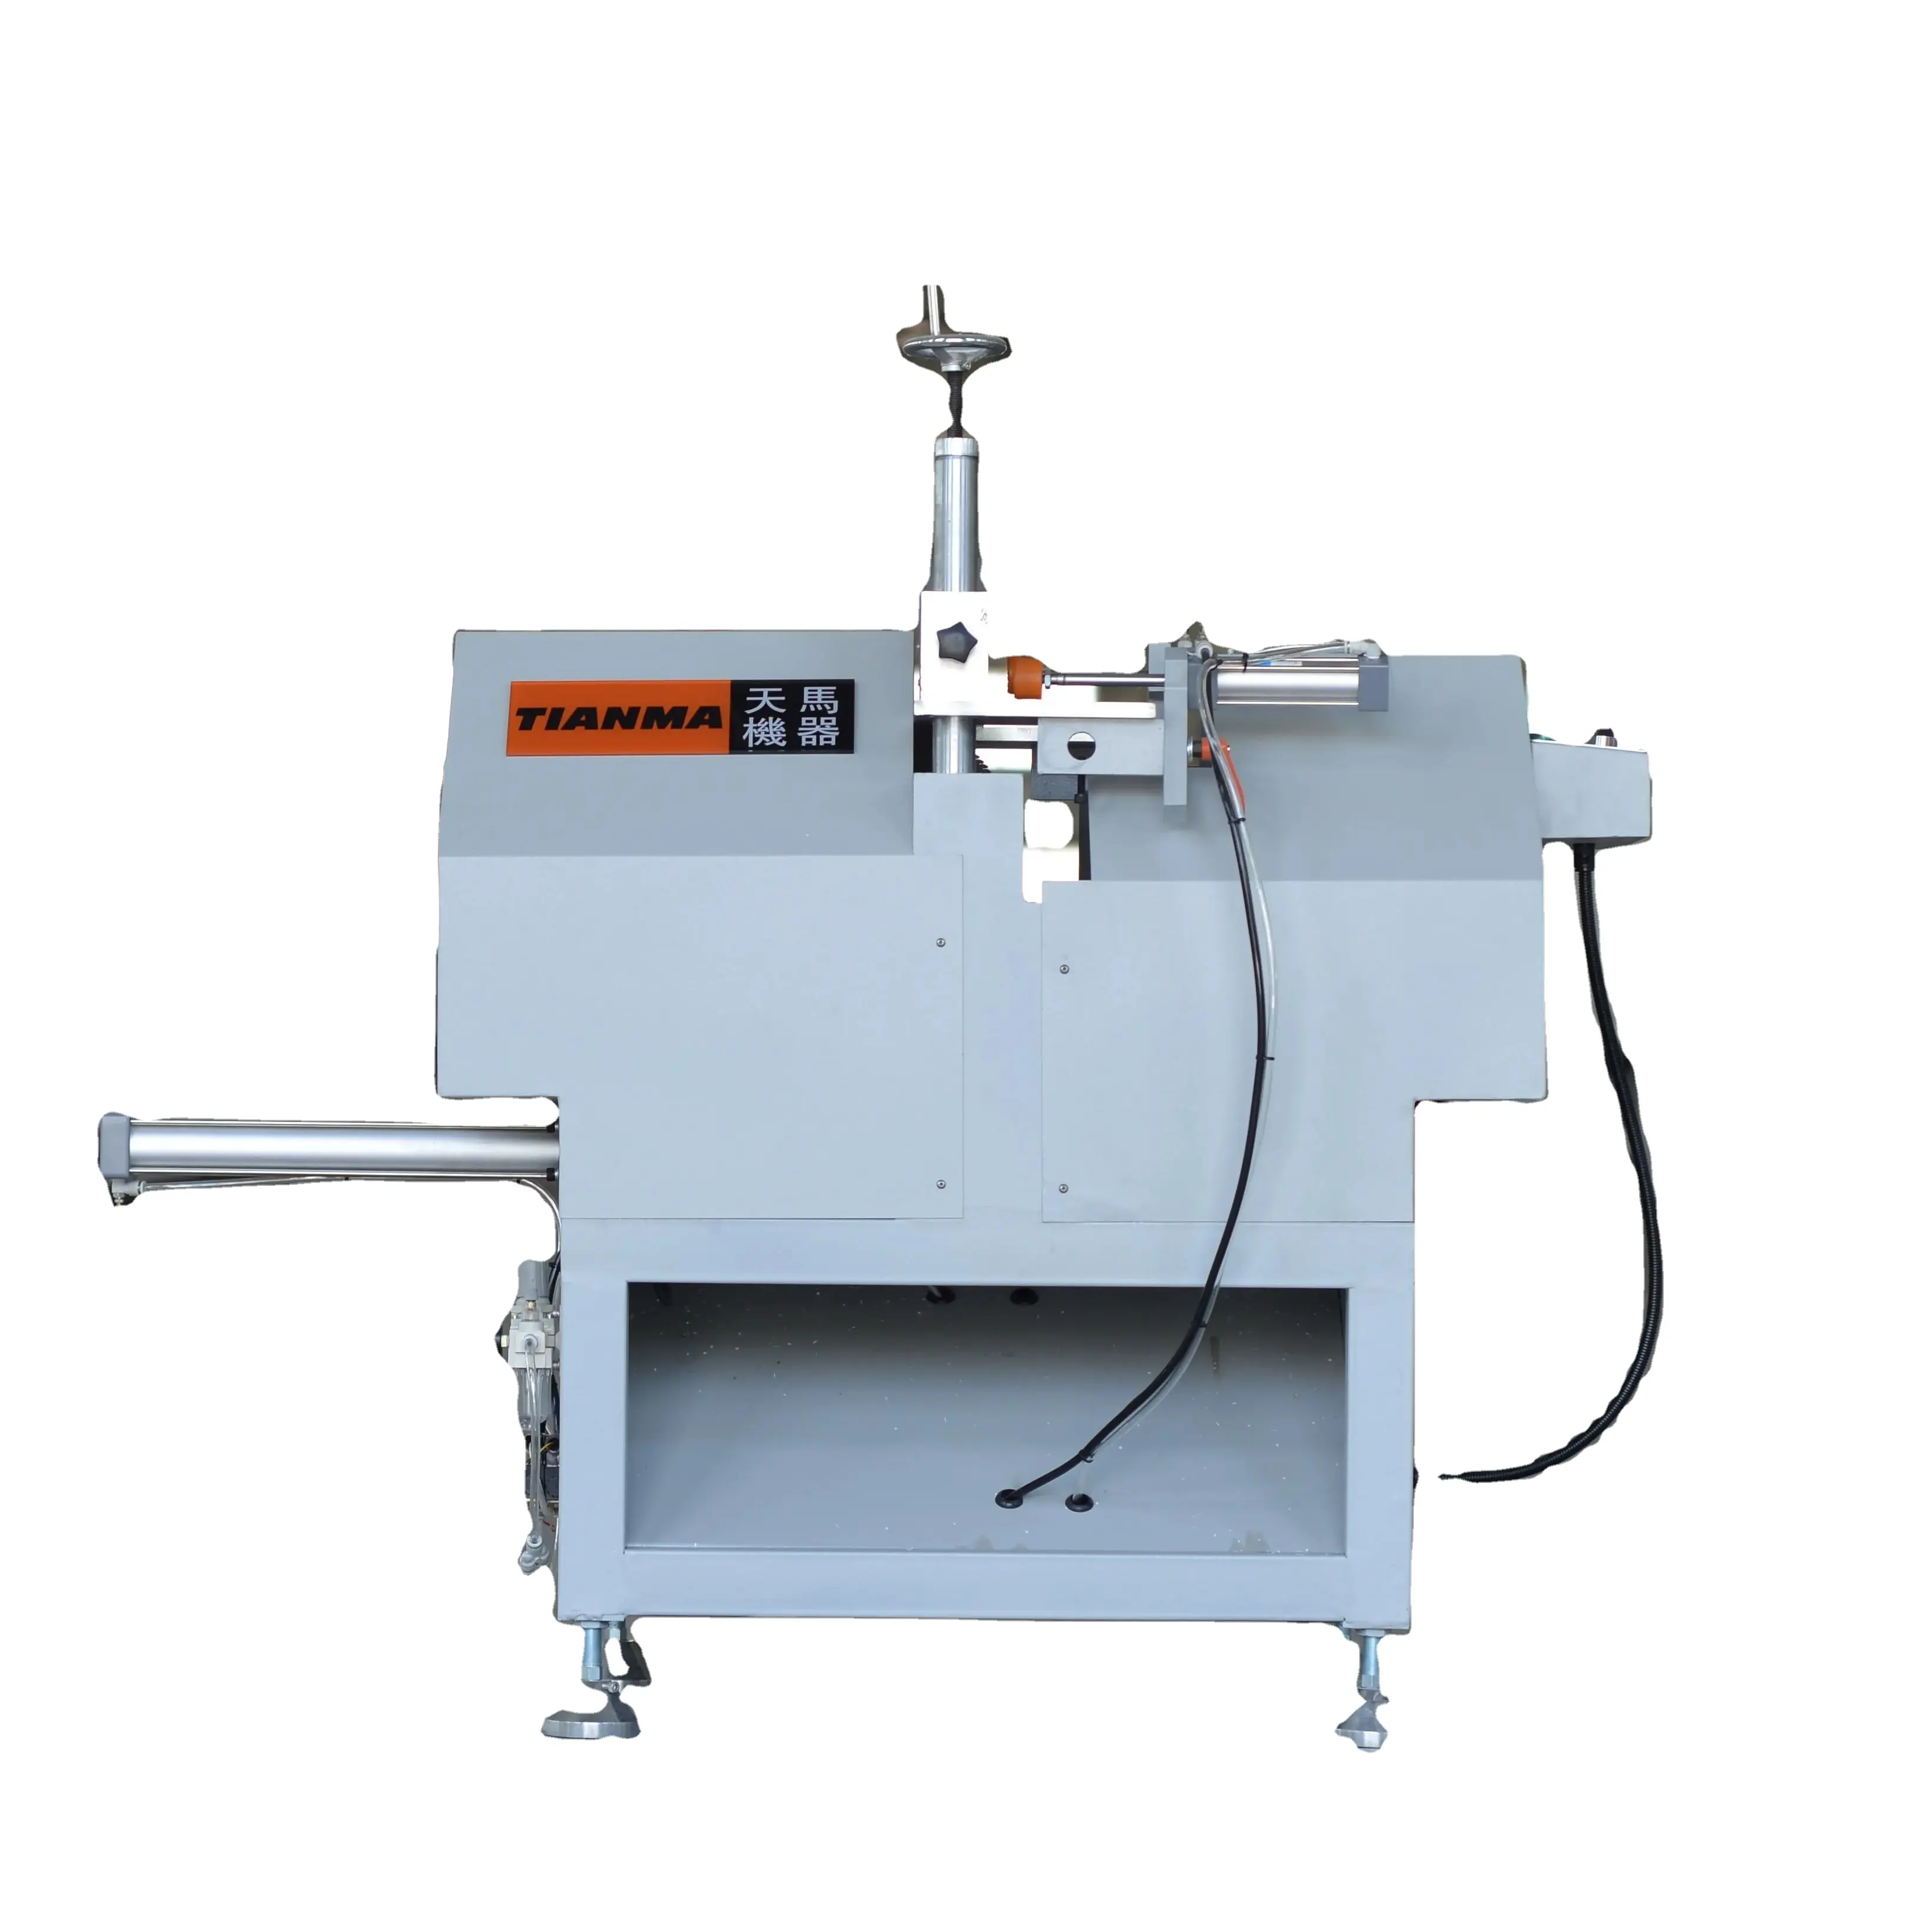 V-saw, V-shaped saw, equipment for cutting V-shaped grooves aluminium machine